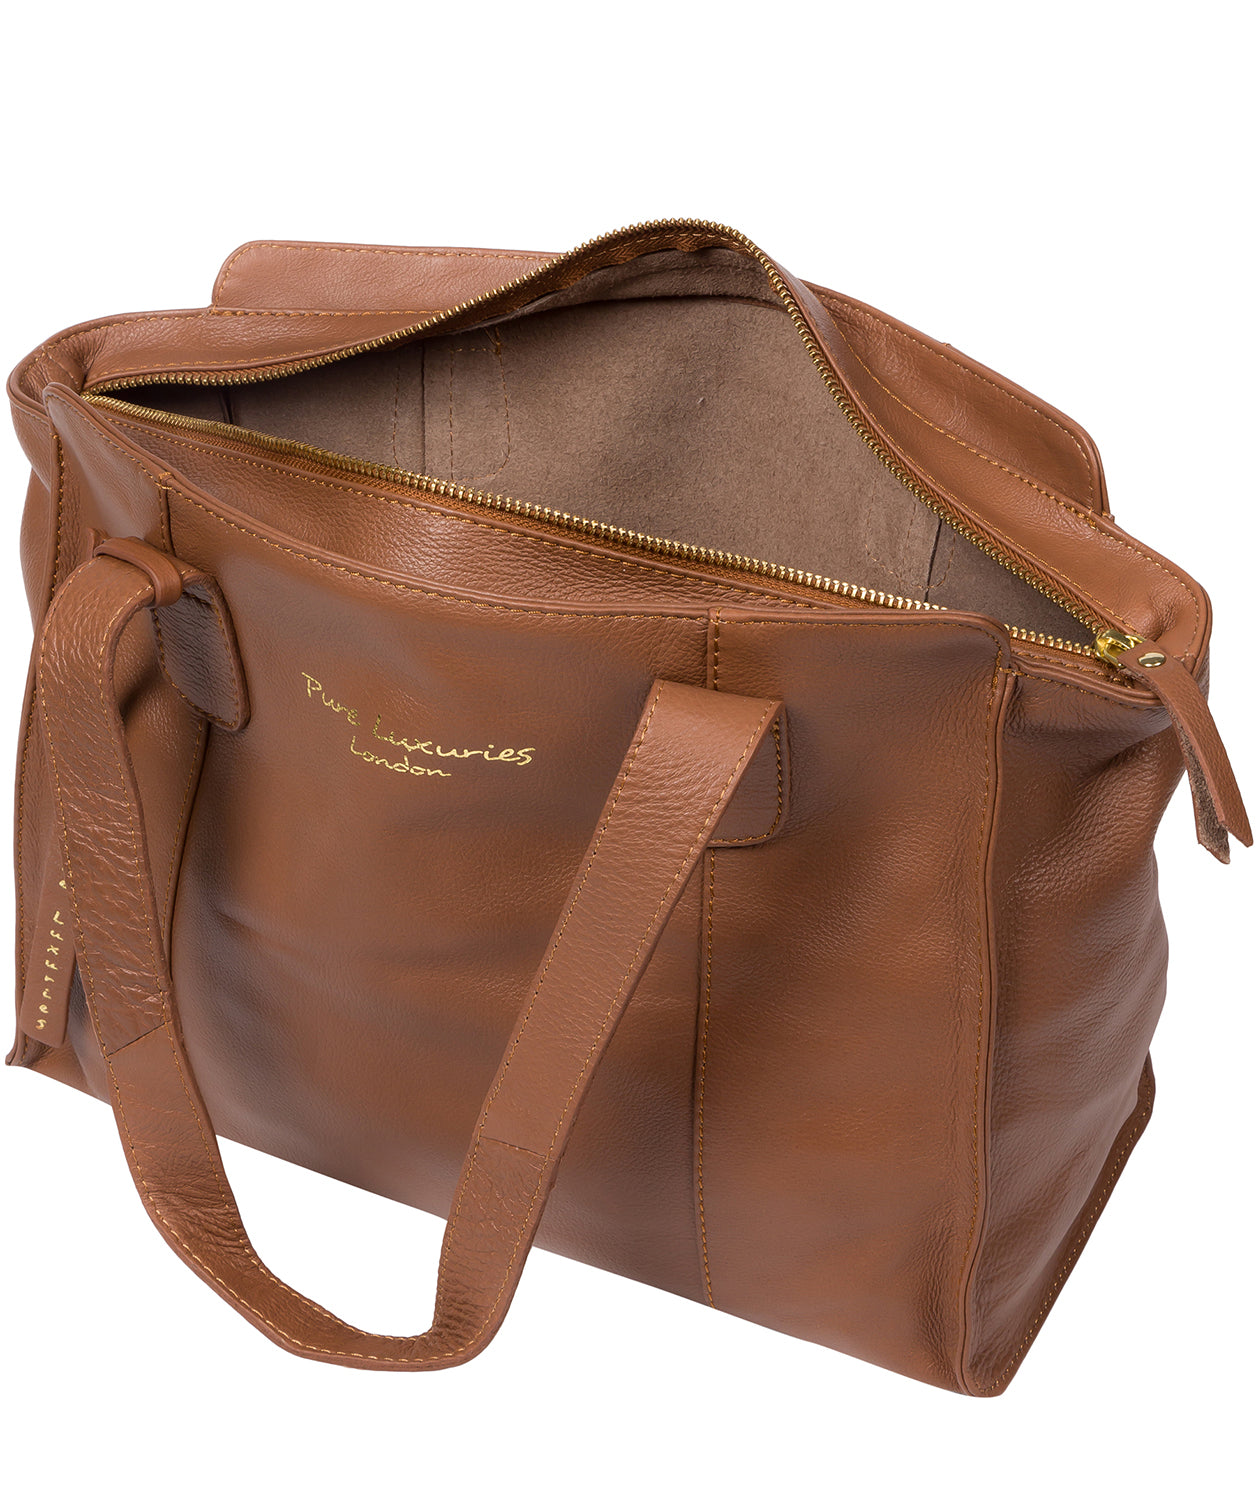 'Alexandra' Tan Leather Handbag